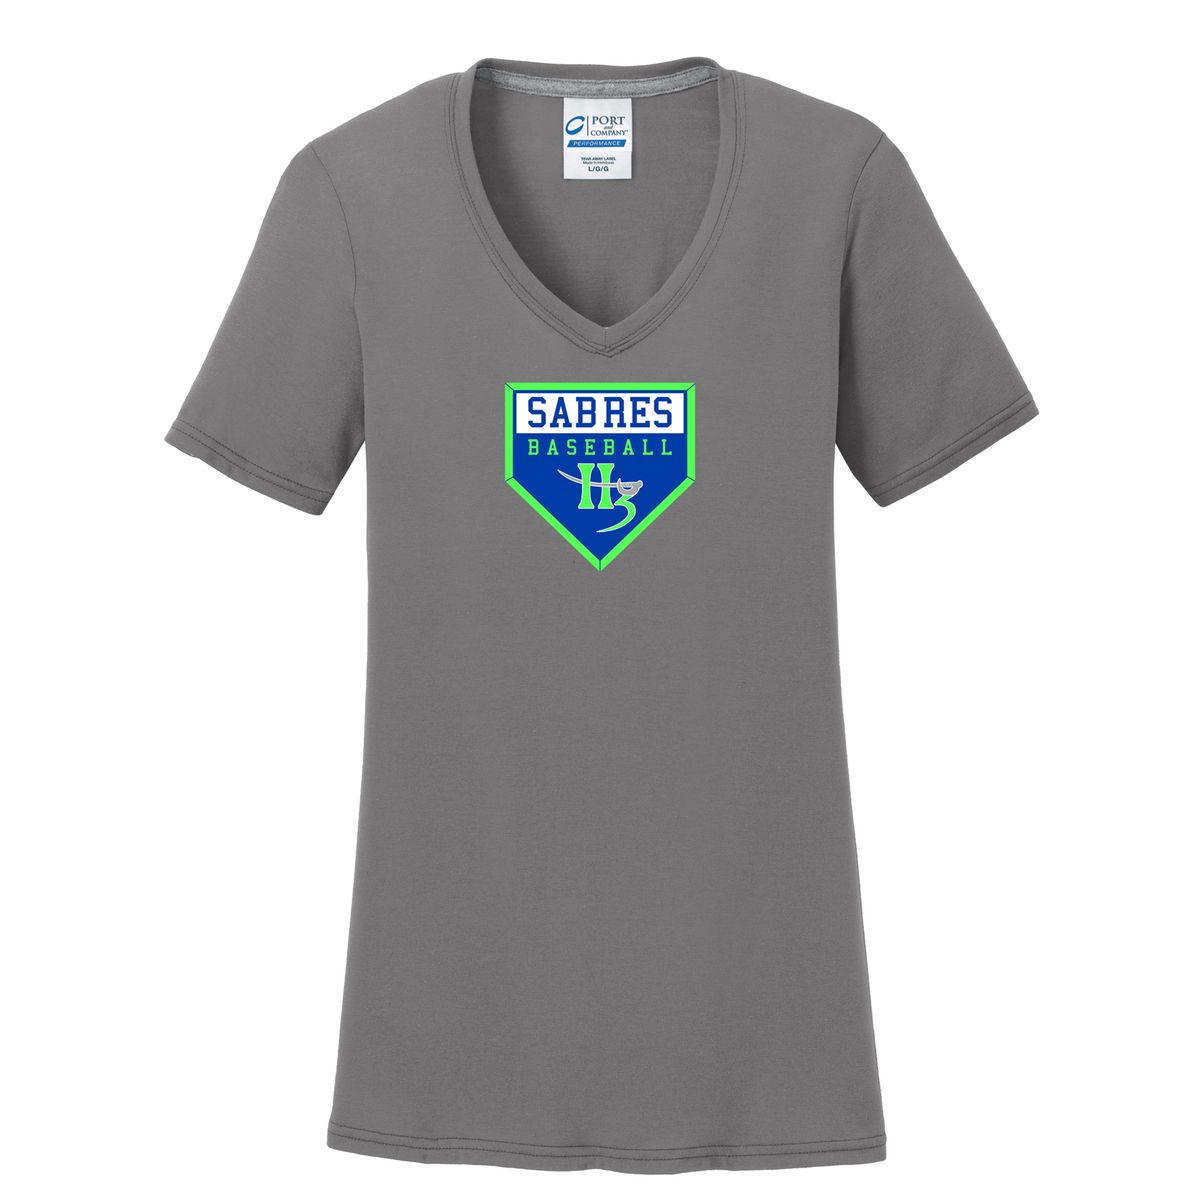 H3 Sabres Baseball  Women's T-Shirt